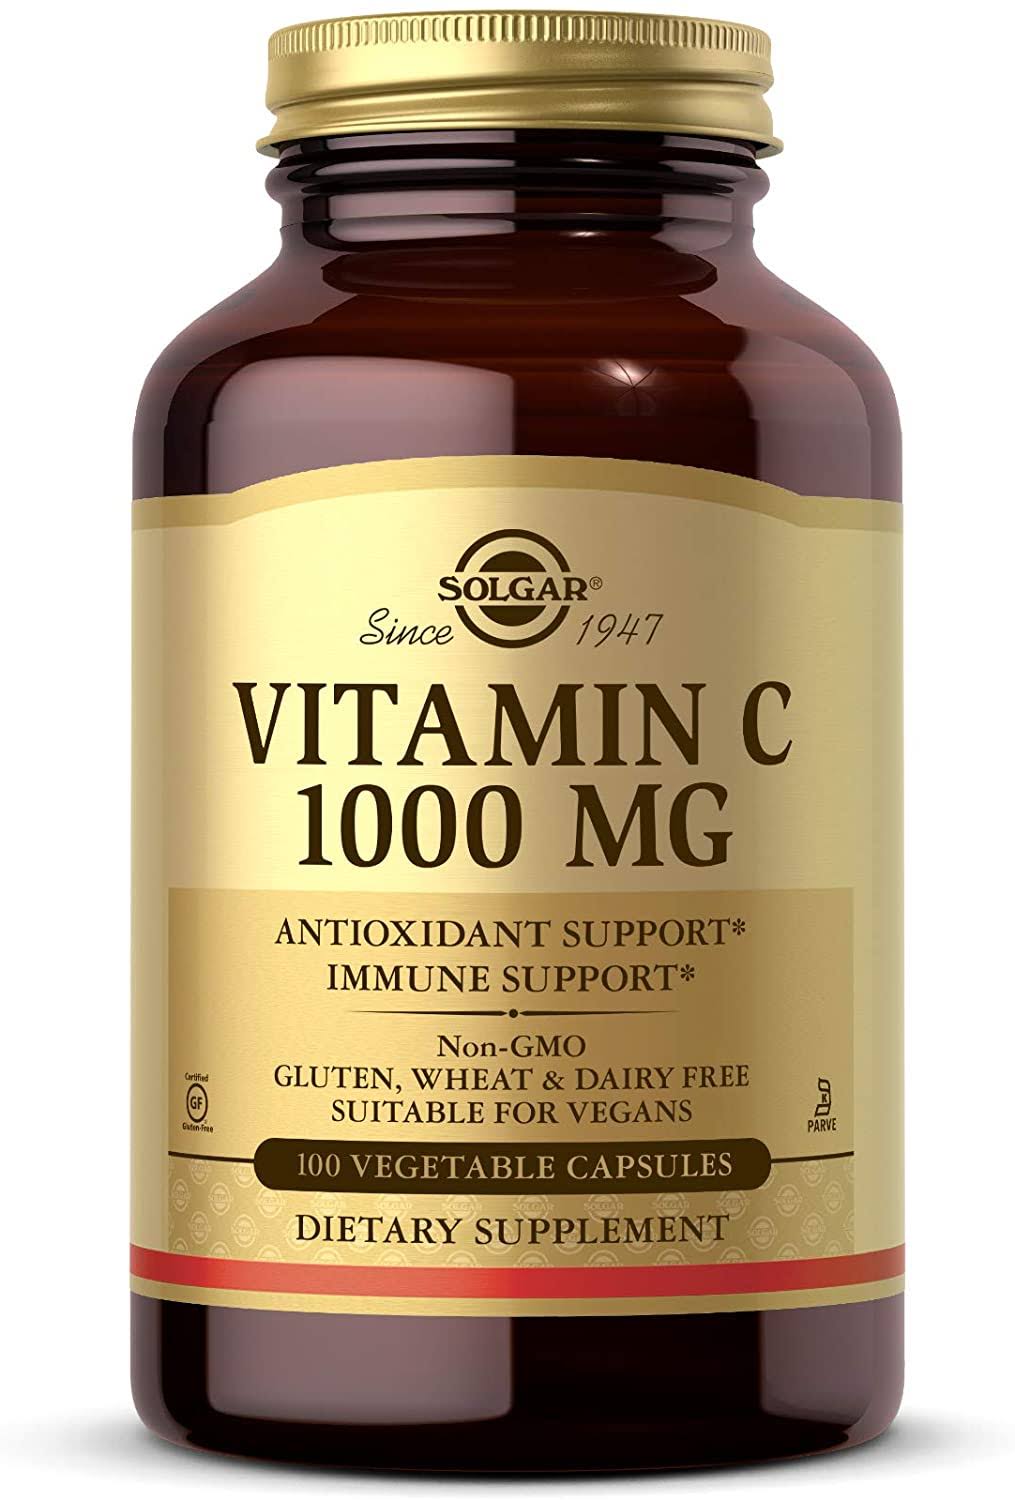 Solgar Vitamin C 1000 mg Vegetable Capsules